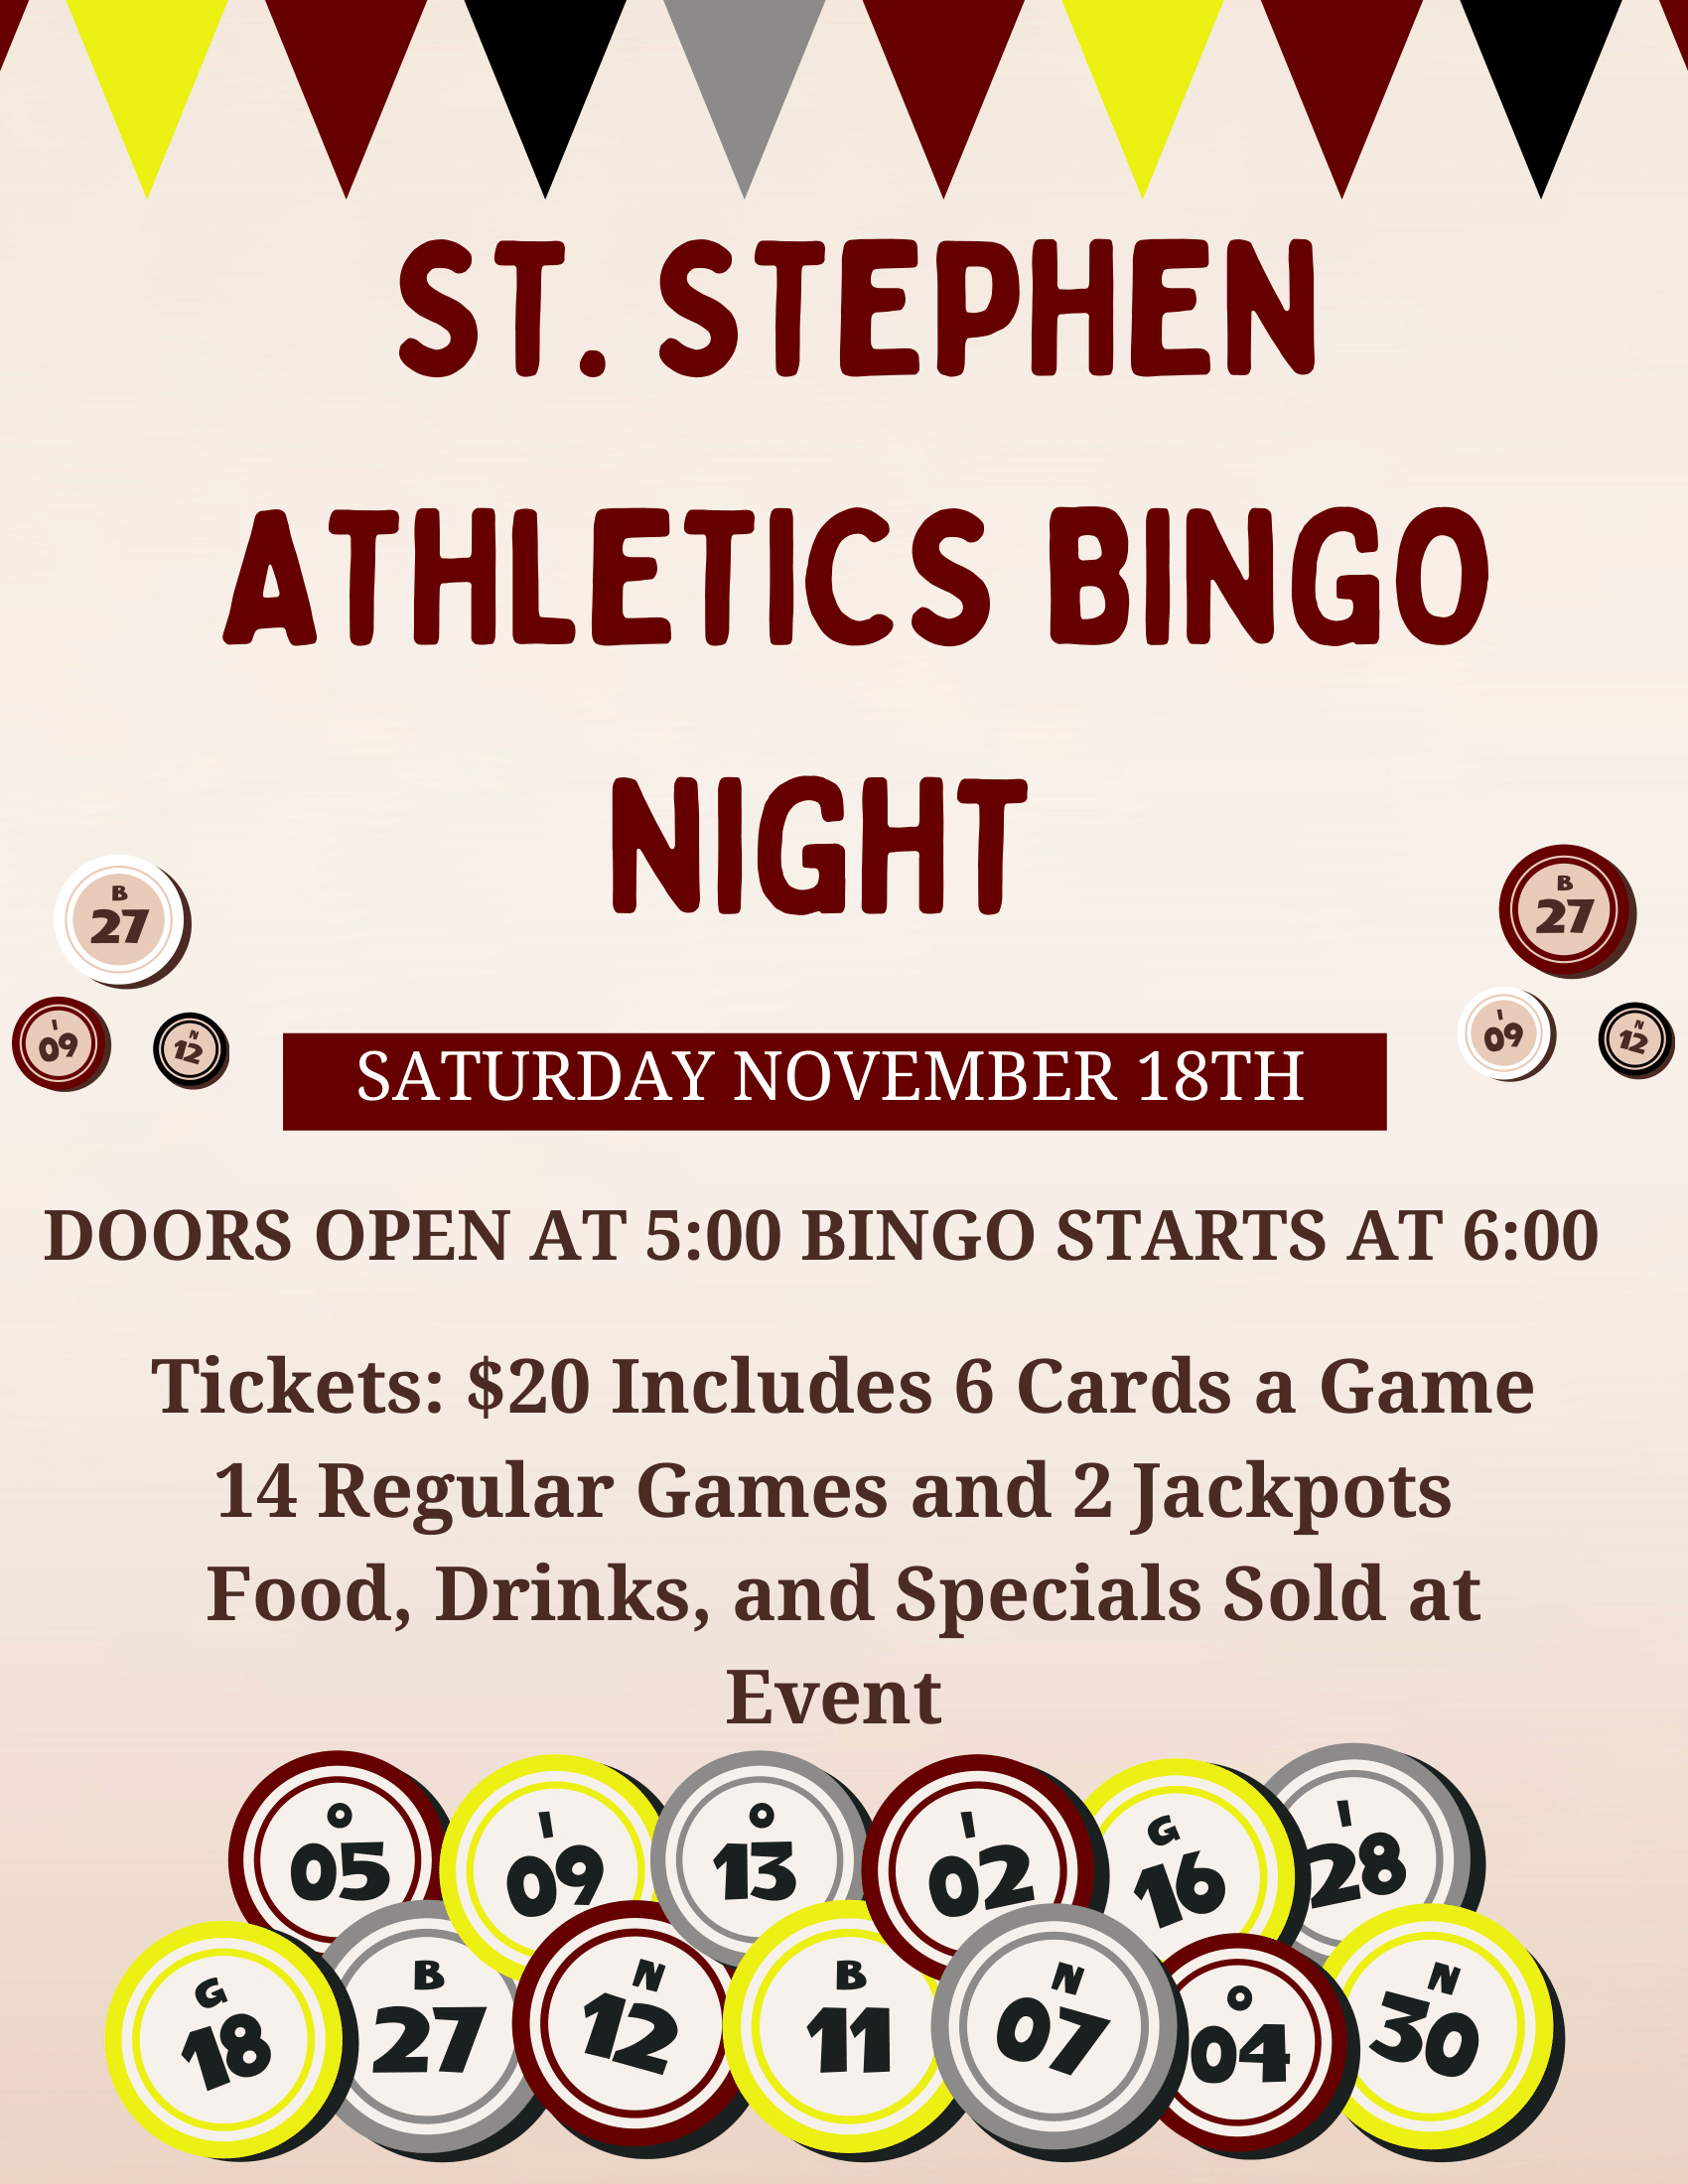 St. Stephen Athletics Bingo Night